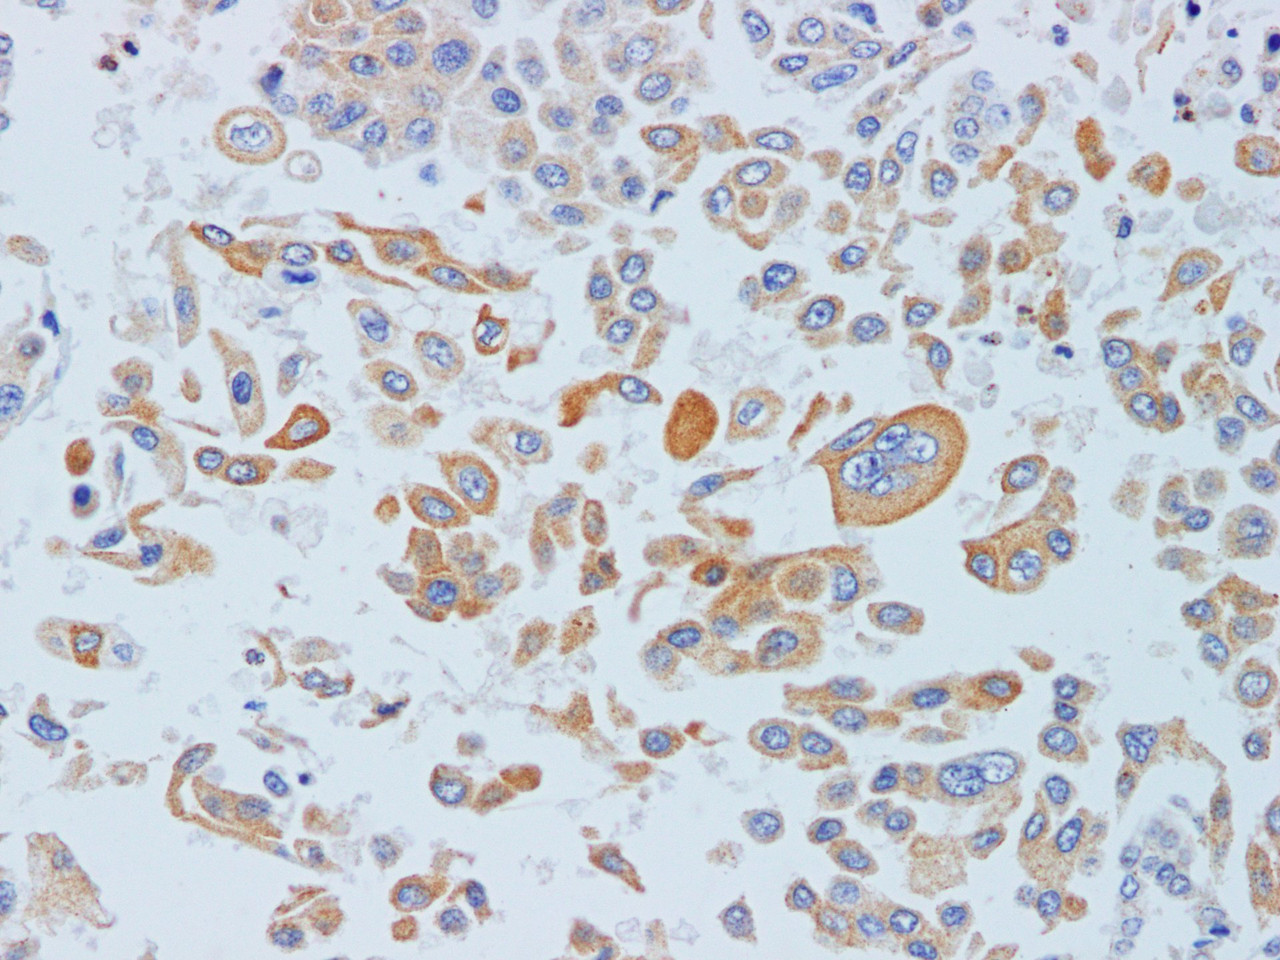 https://file.elabscience.com//image/antibody/EA/E-AB-40263-IHC03.jpg